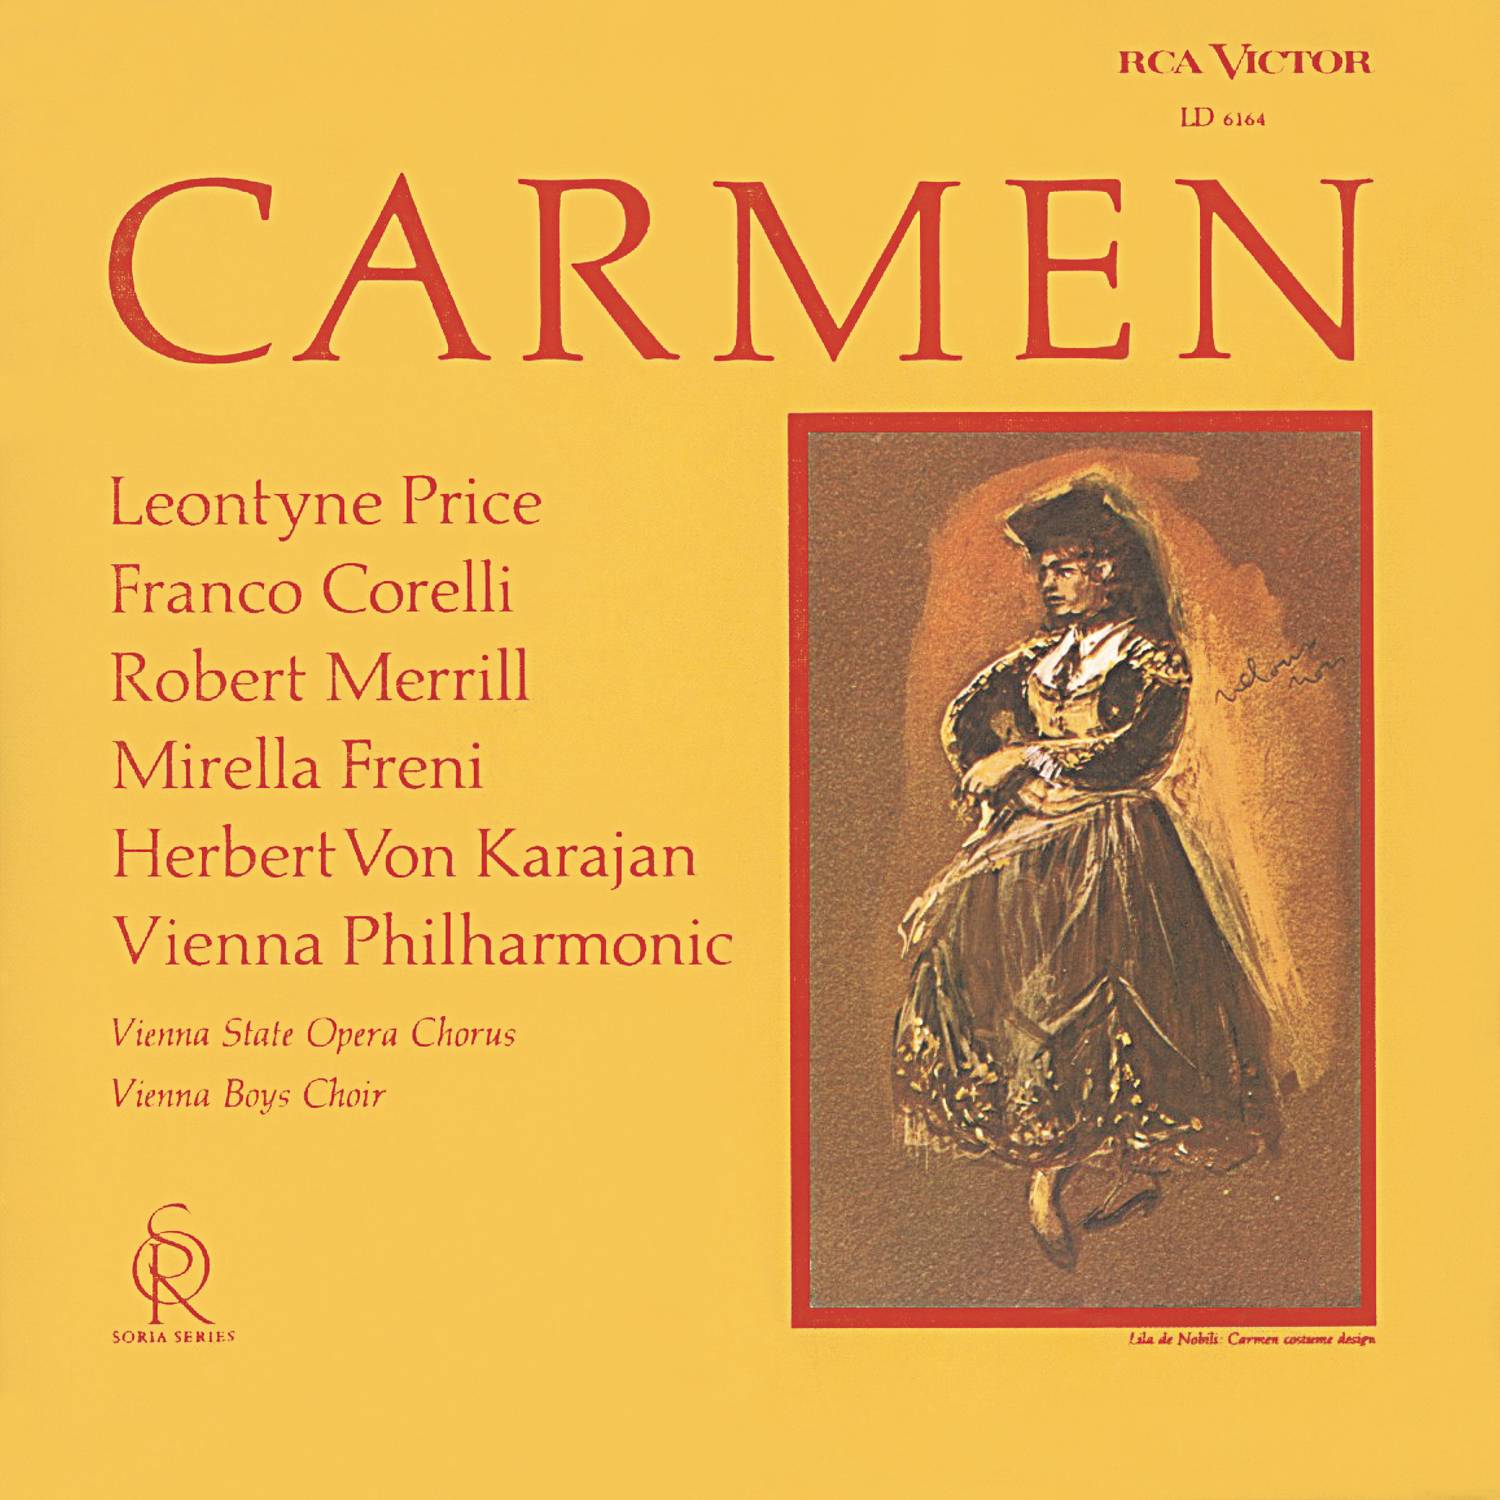 Carmen (Remastered): Act II - Entr'acte (2008 SACD Remastered)